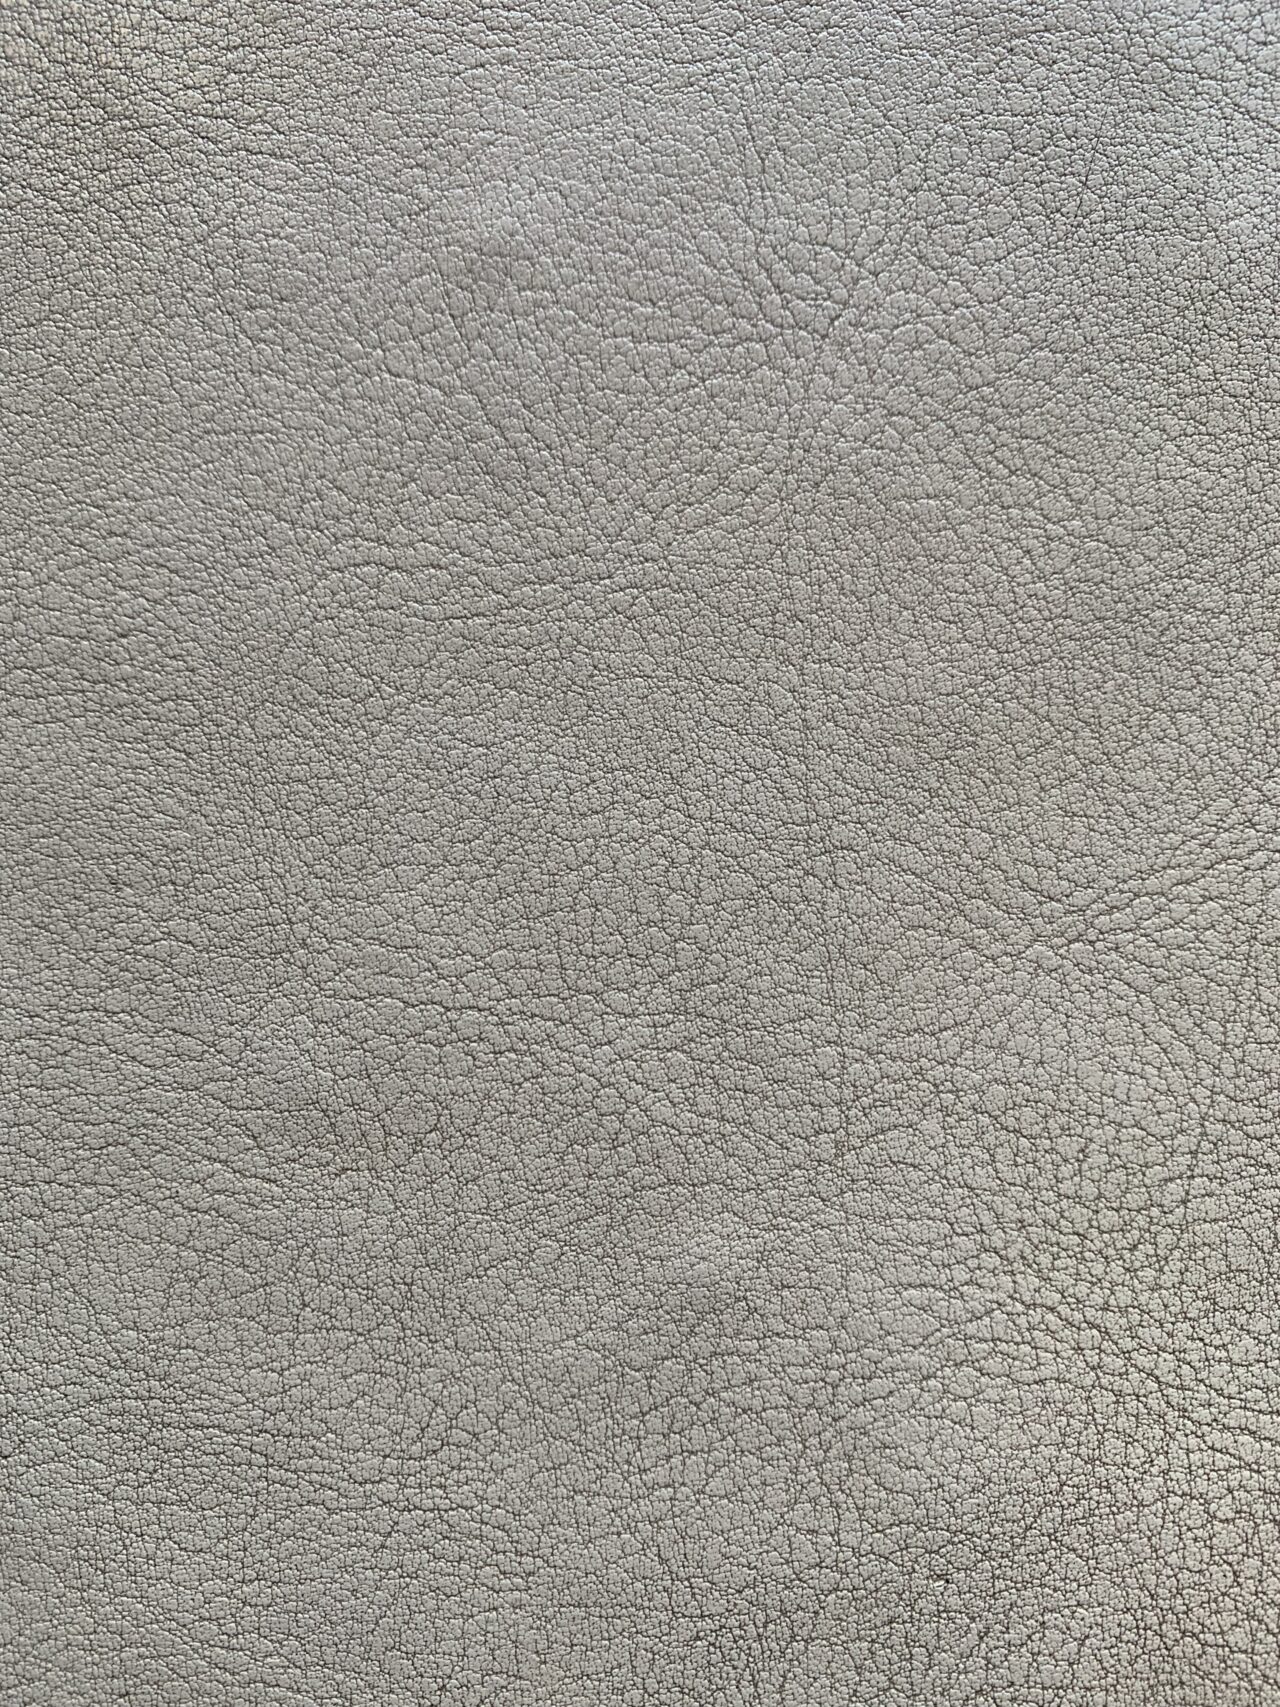 Leather Chair Cracks Closeup Texture Pattern